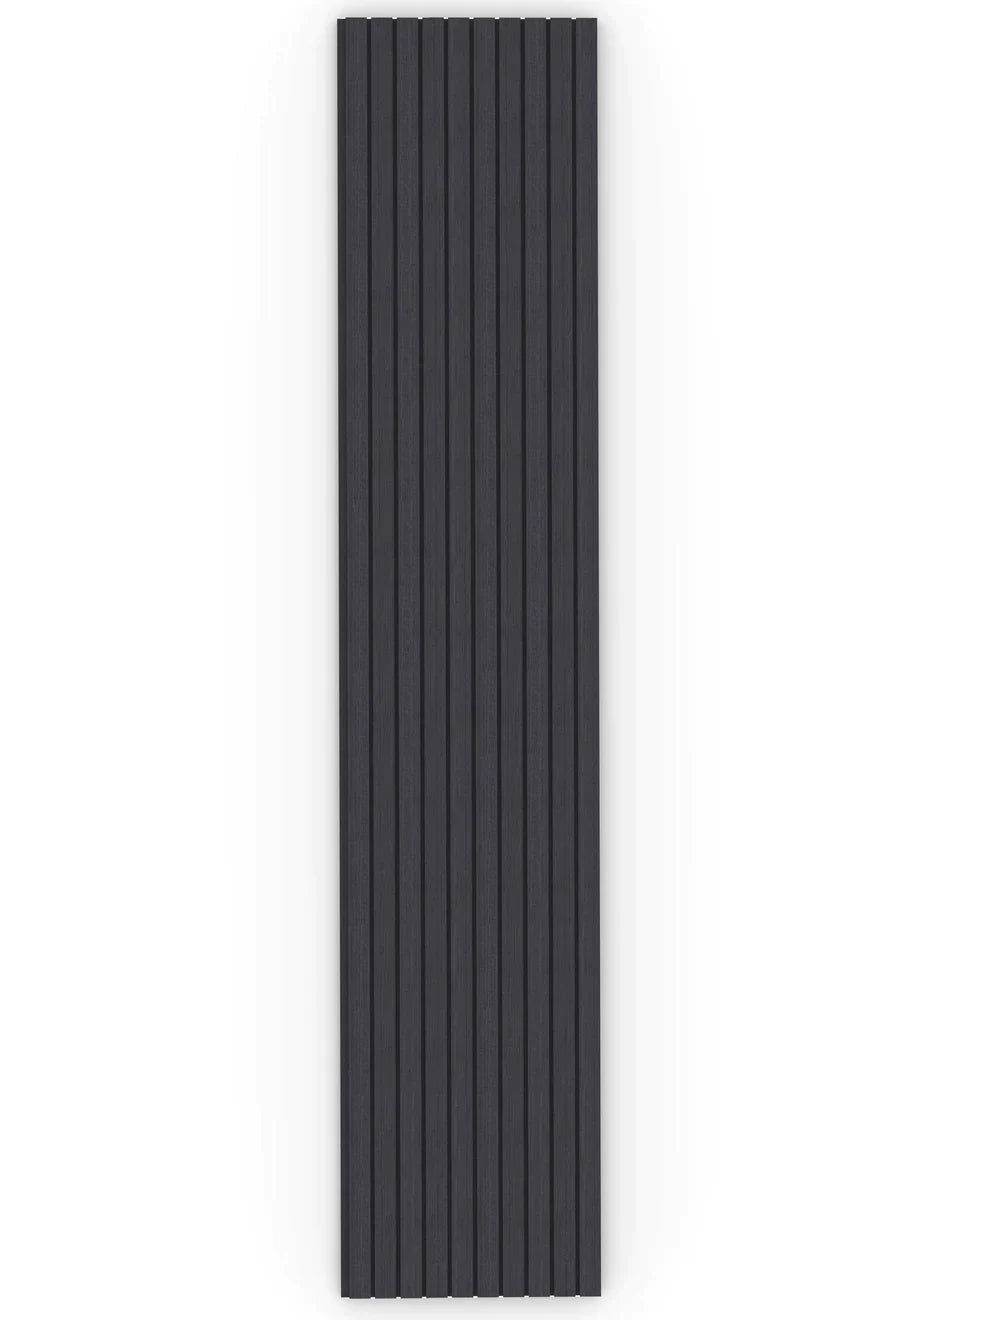 FREE SAMPLE | Black Acoustic Wood Wall Panels | Series 2 - 240x60cm